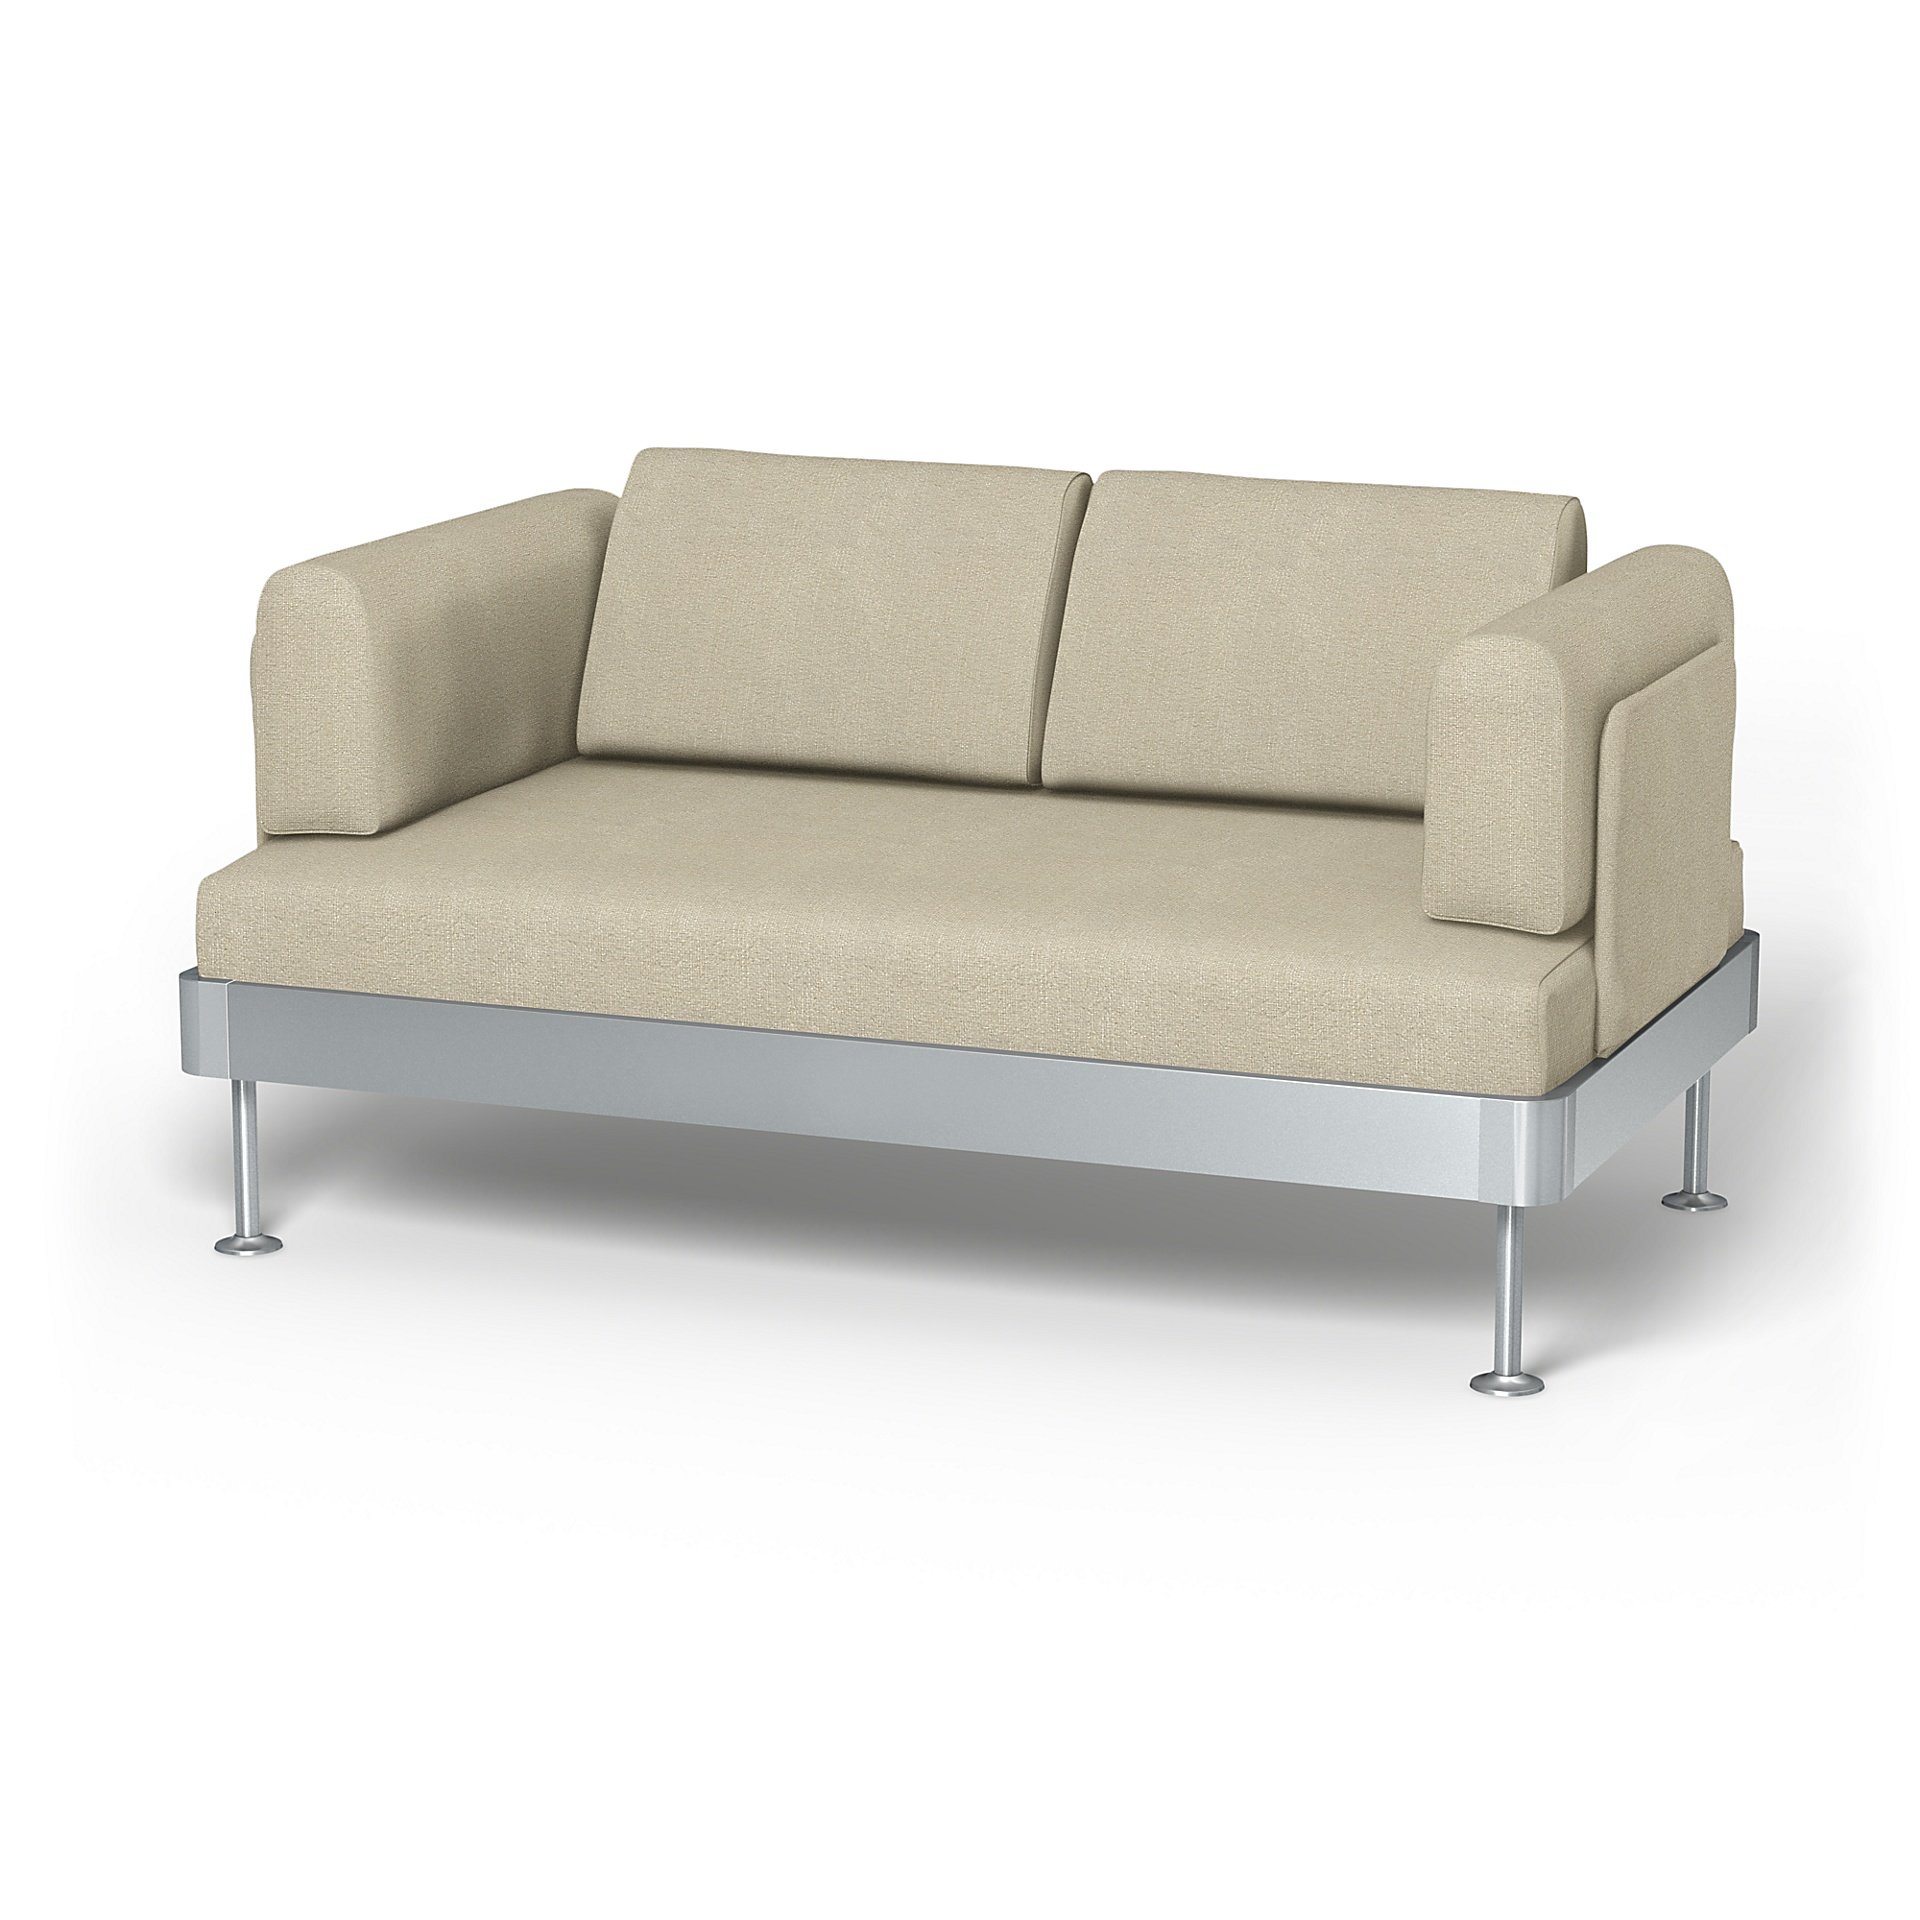 IKEA - Delaktig 2 Seater Sofa Cover, Cream, Boucle & Texture - Bemz